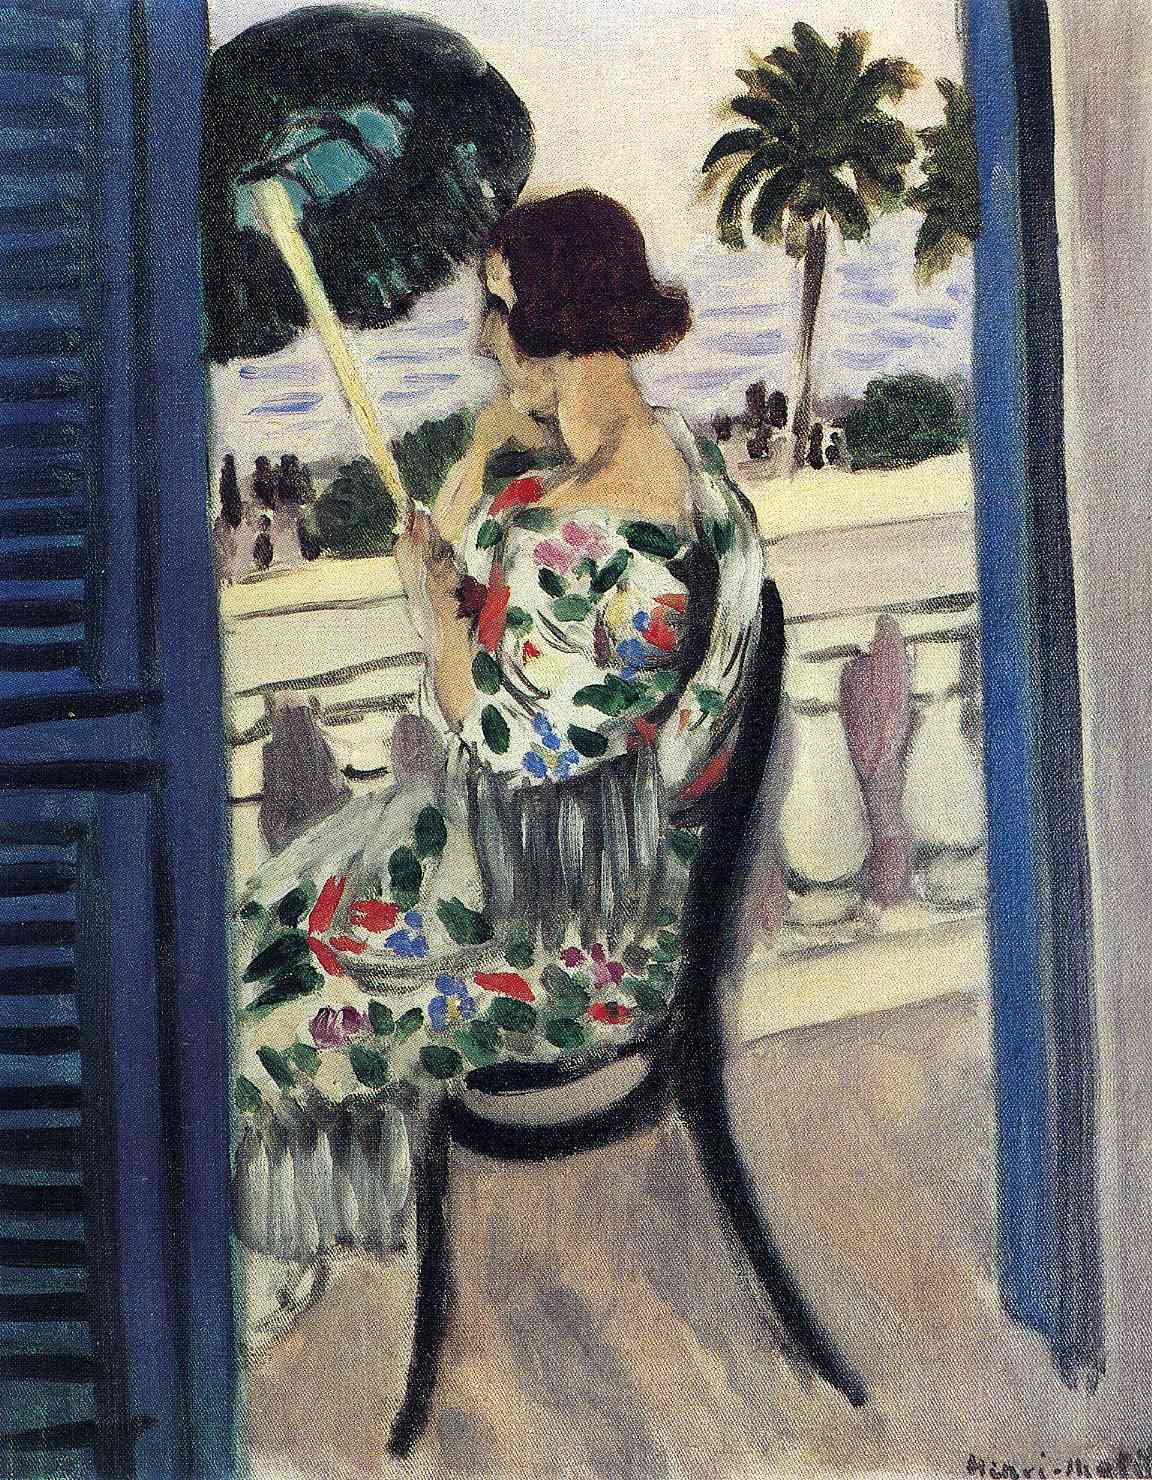 Woman holding umbrella (1919).